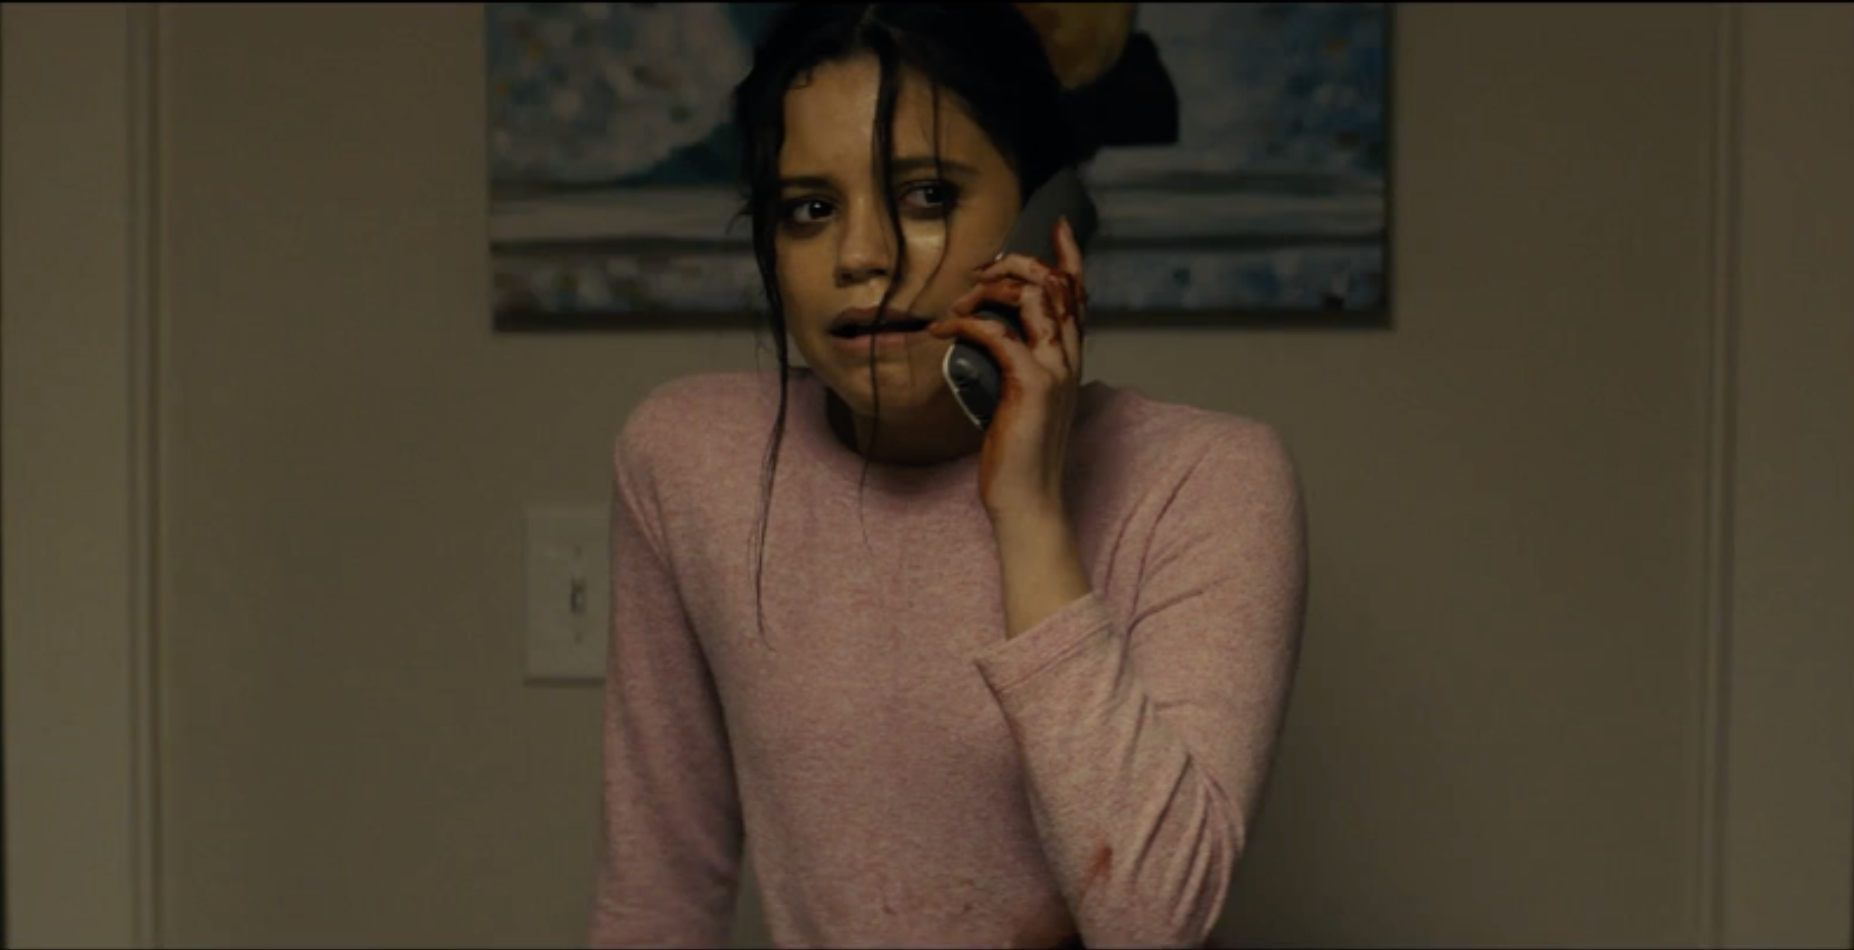 A terrified teen girl on the phone